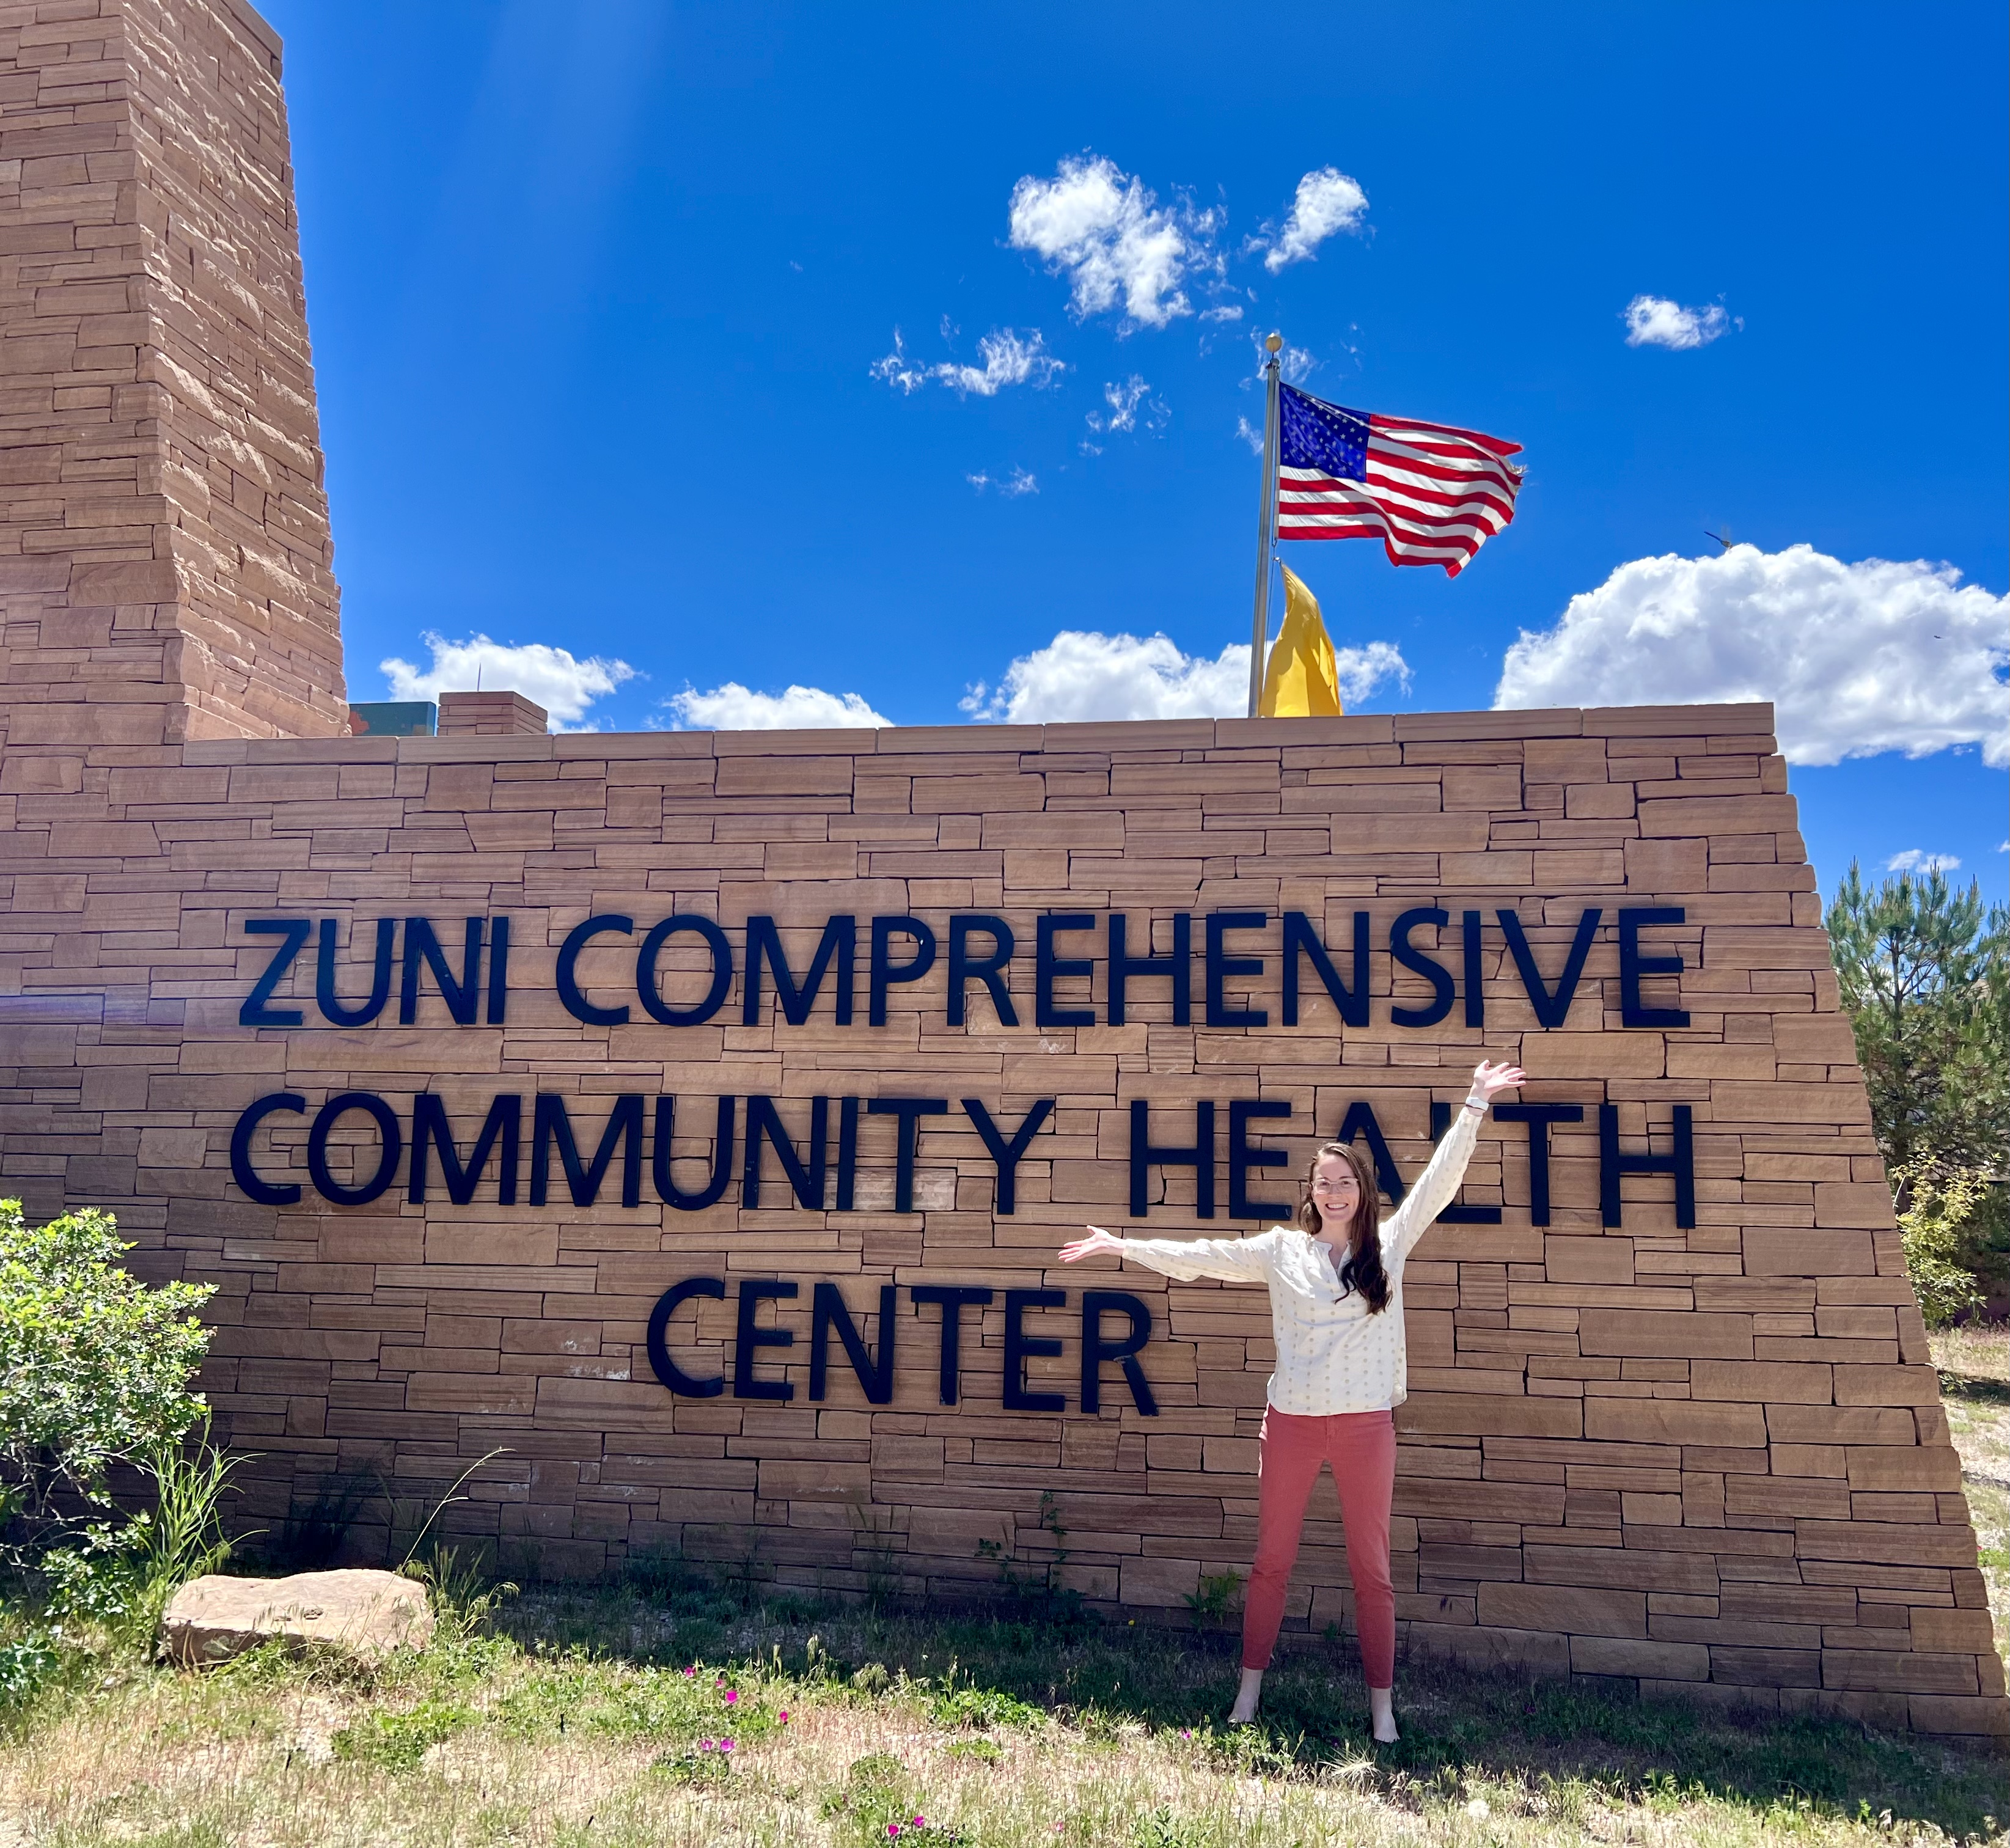 Image of Zuni Comprehensive Community Health Center